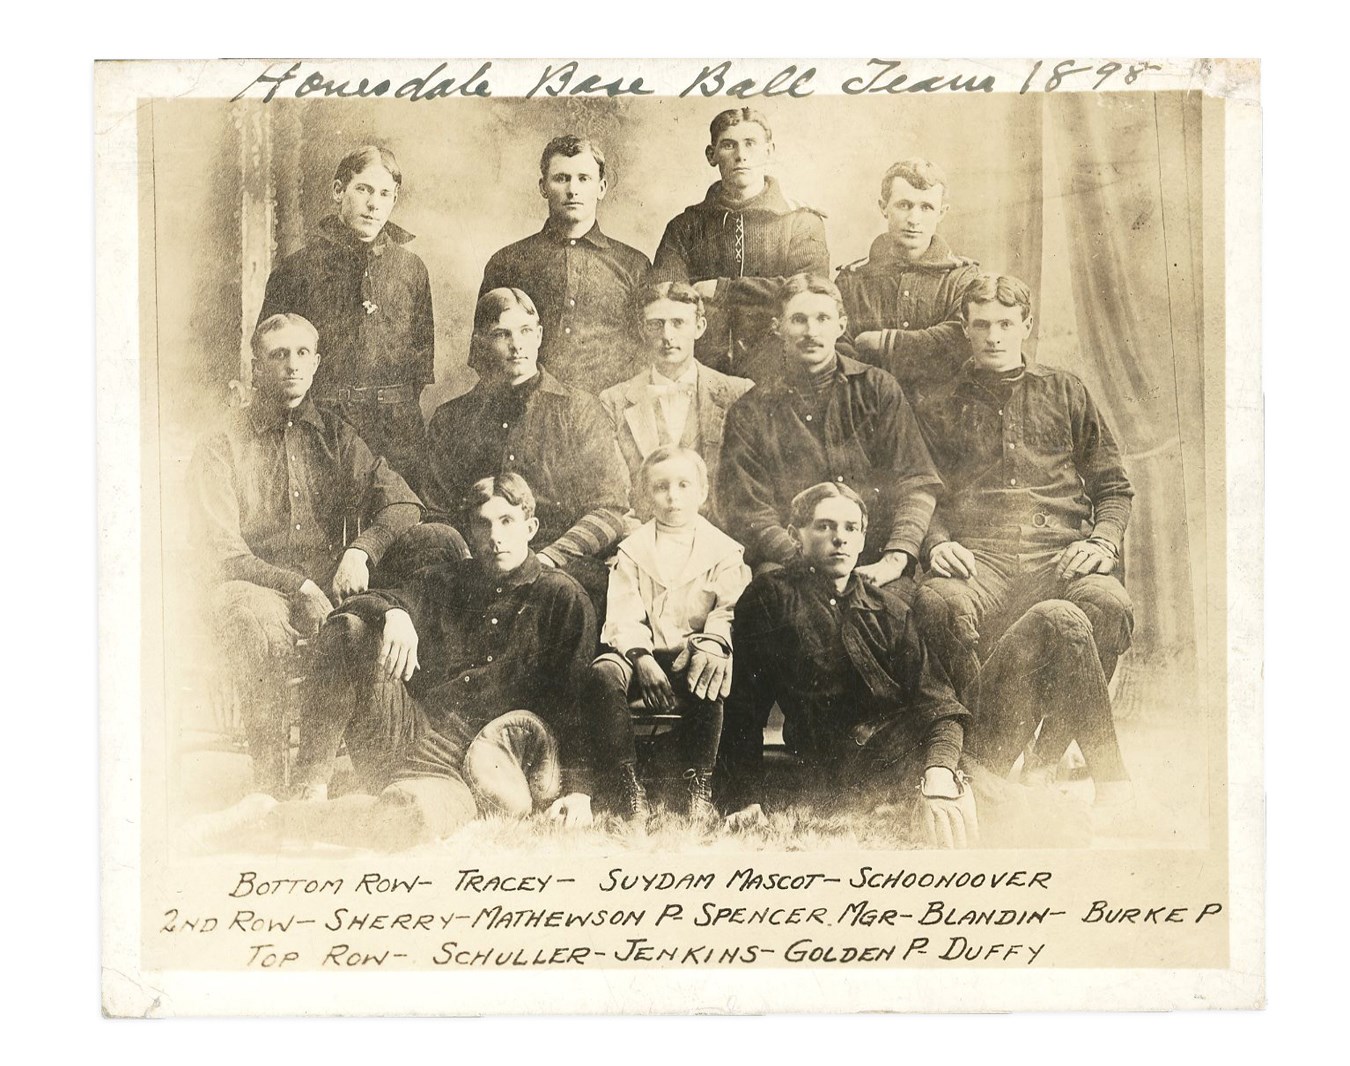 Early Baseball - 1898 Christy Mathewson Team Photograph - Earliest Known